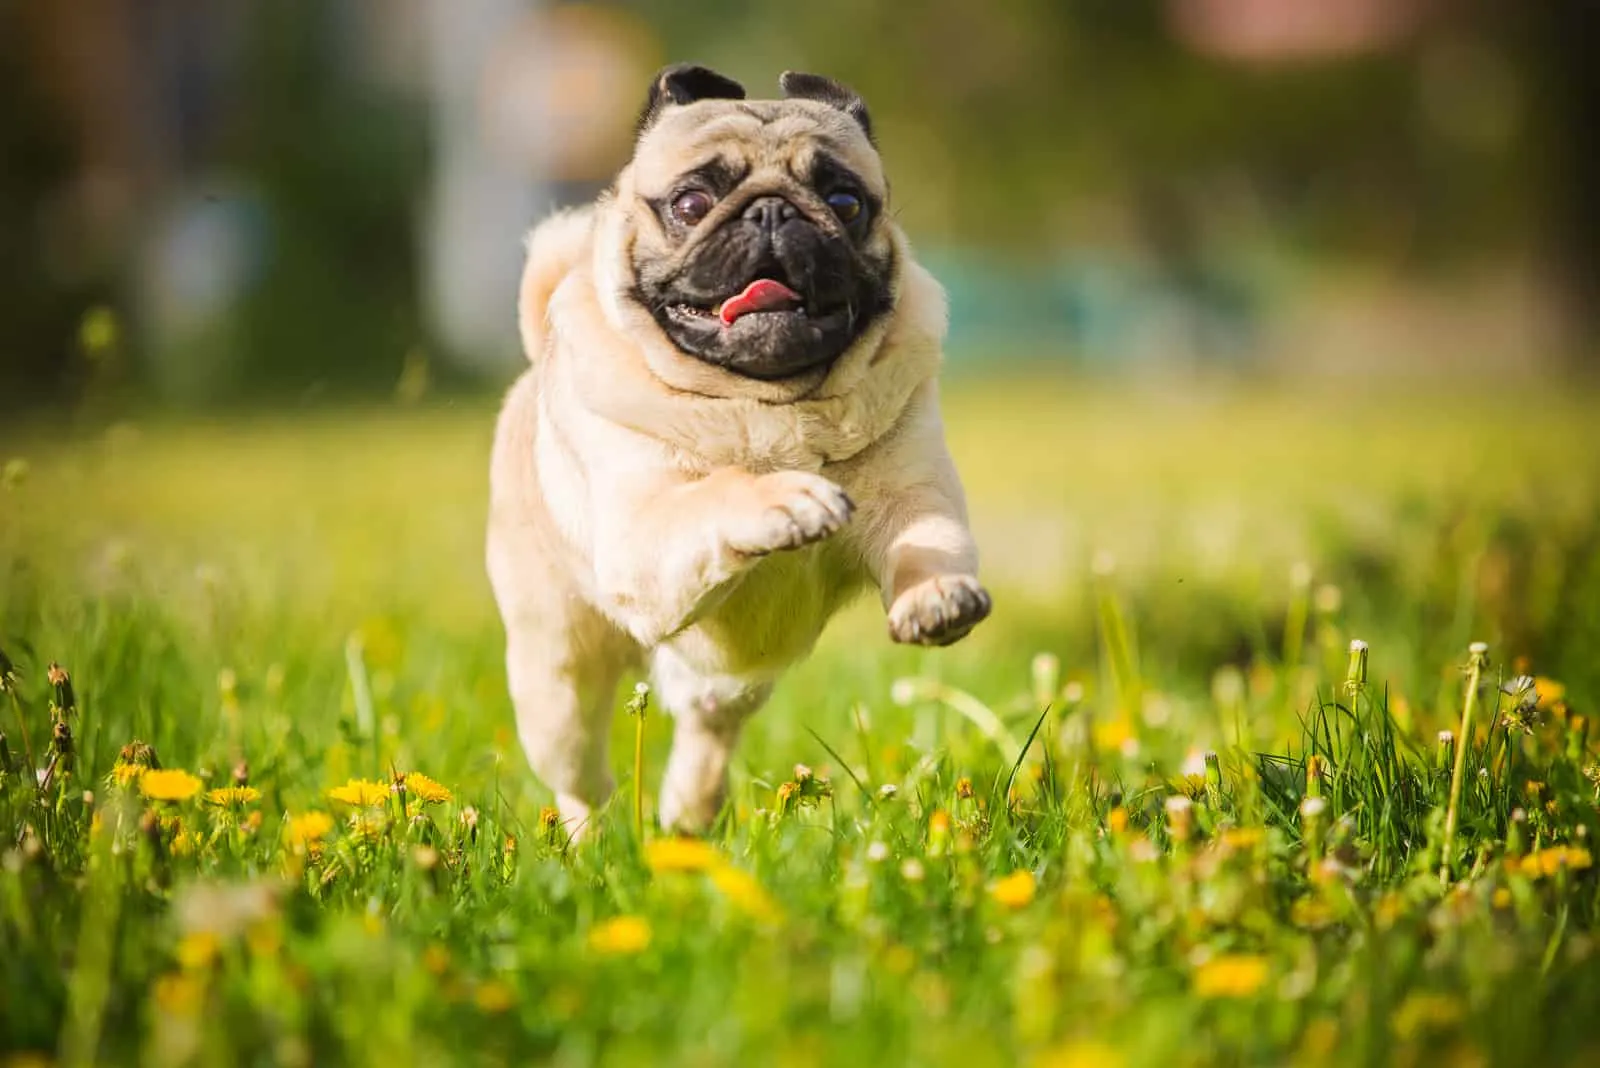 pug running across field of flowers